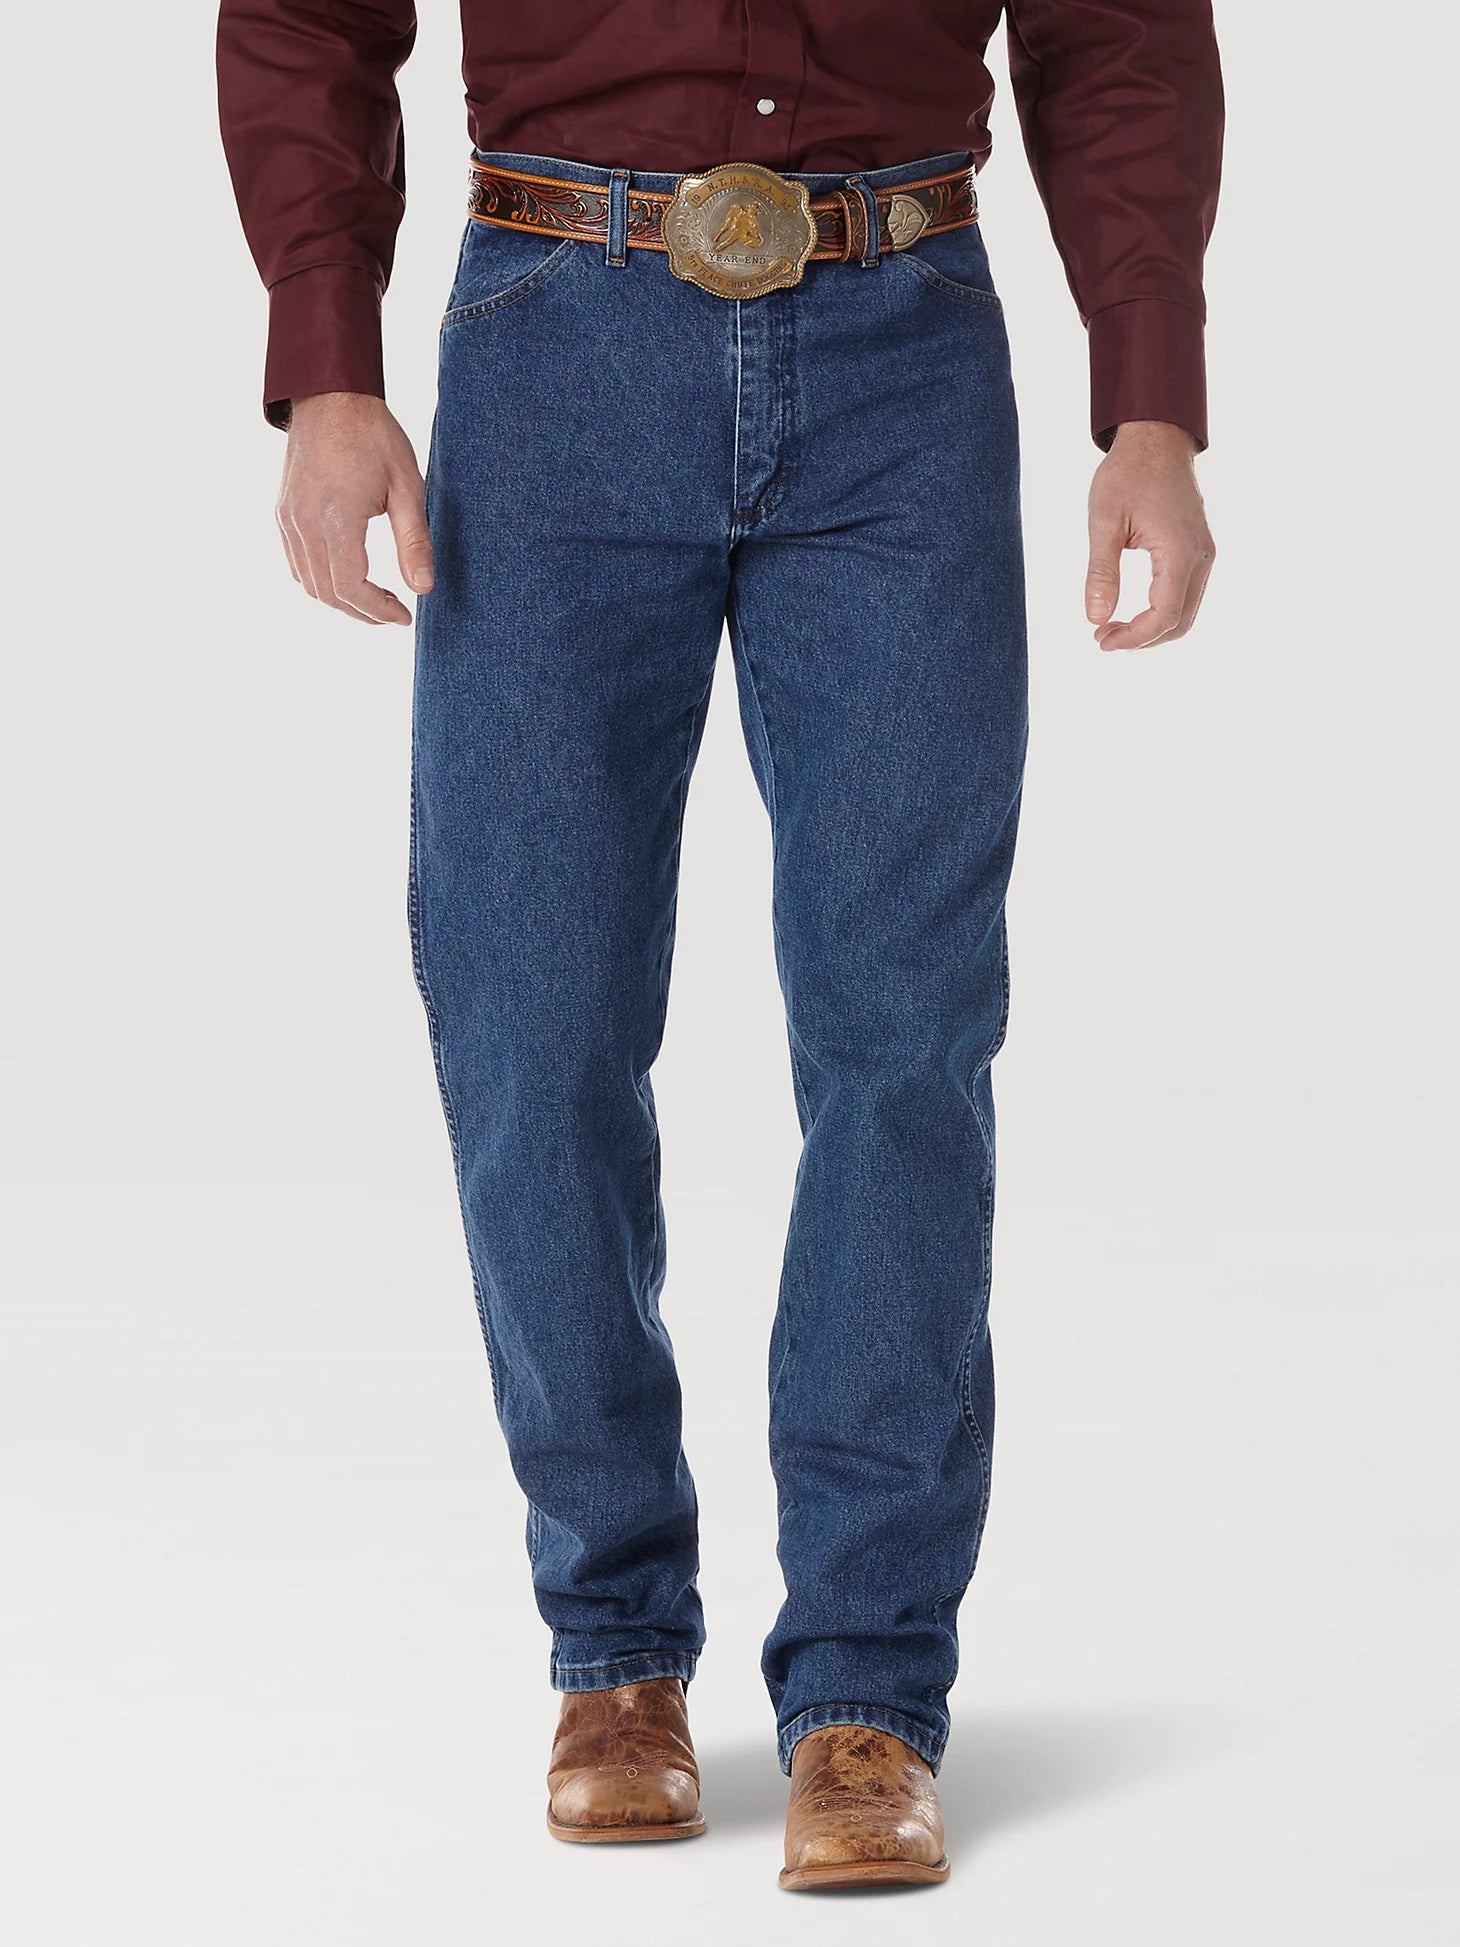 Jeans Wrangler Original Fit Stonewashed Caballero